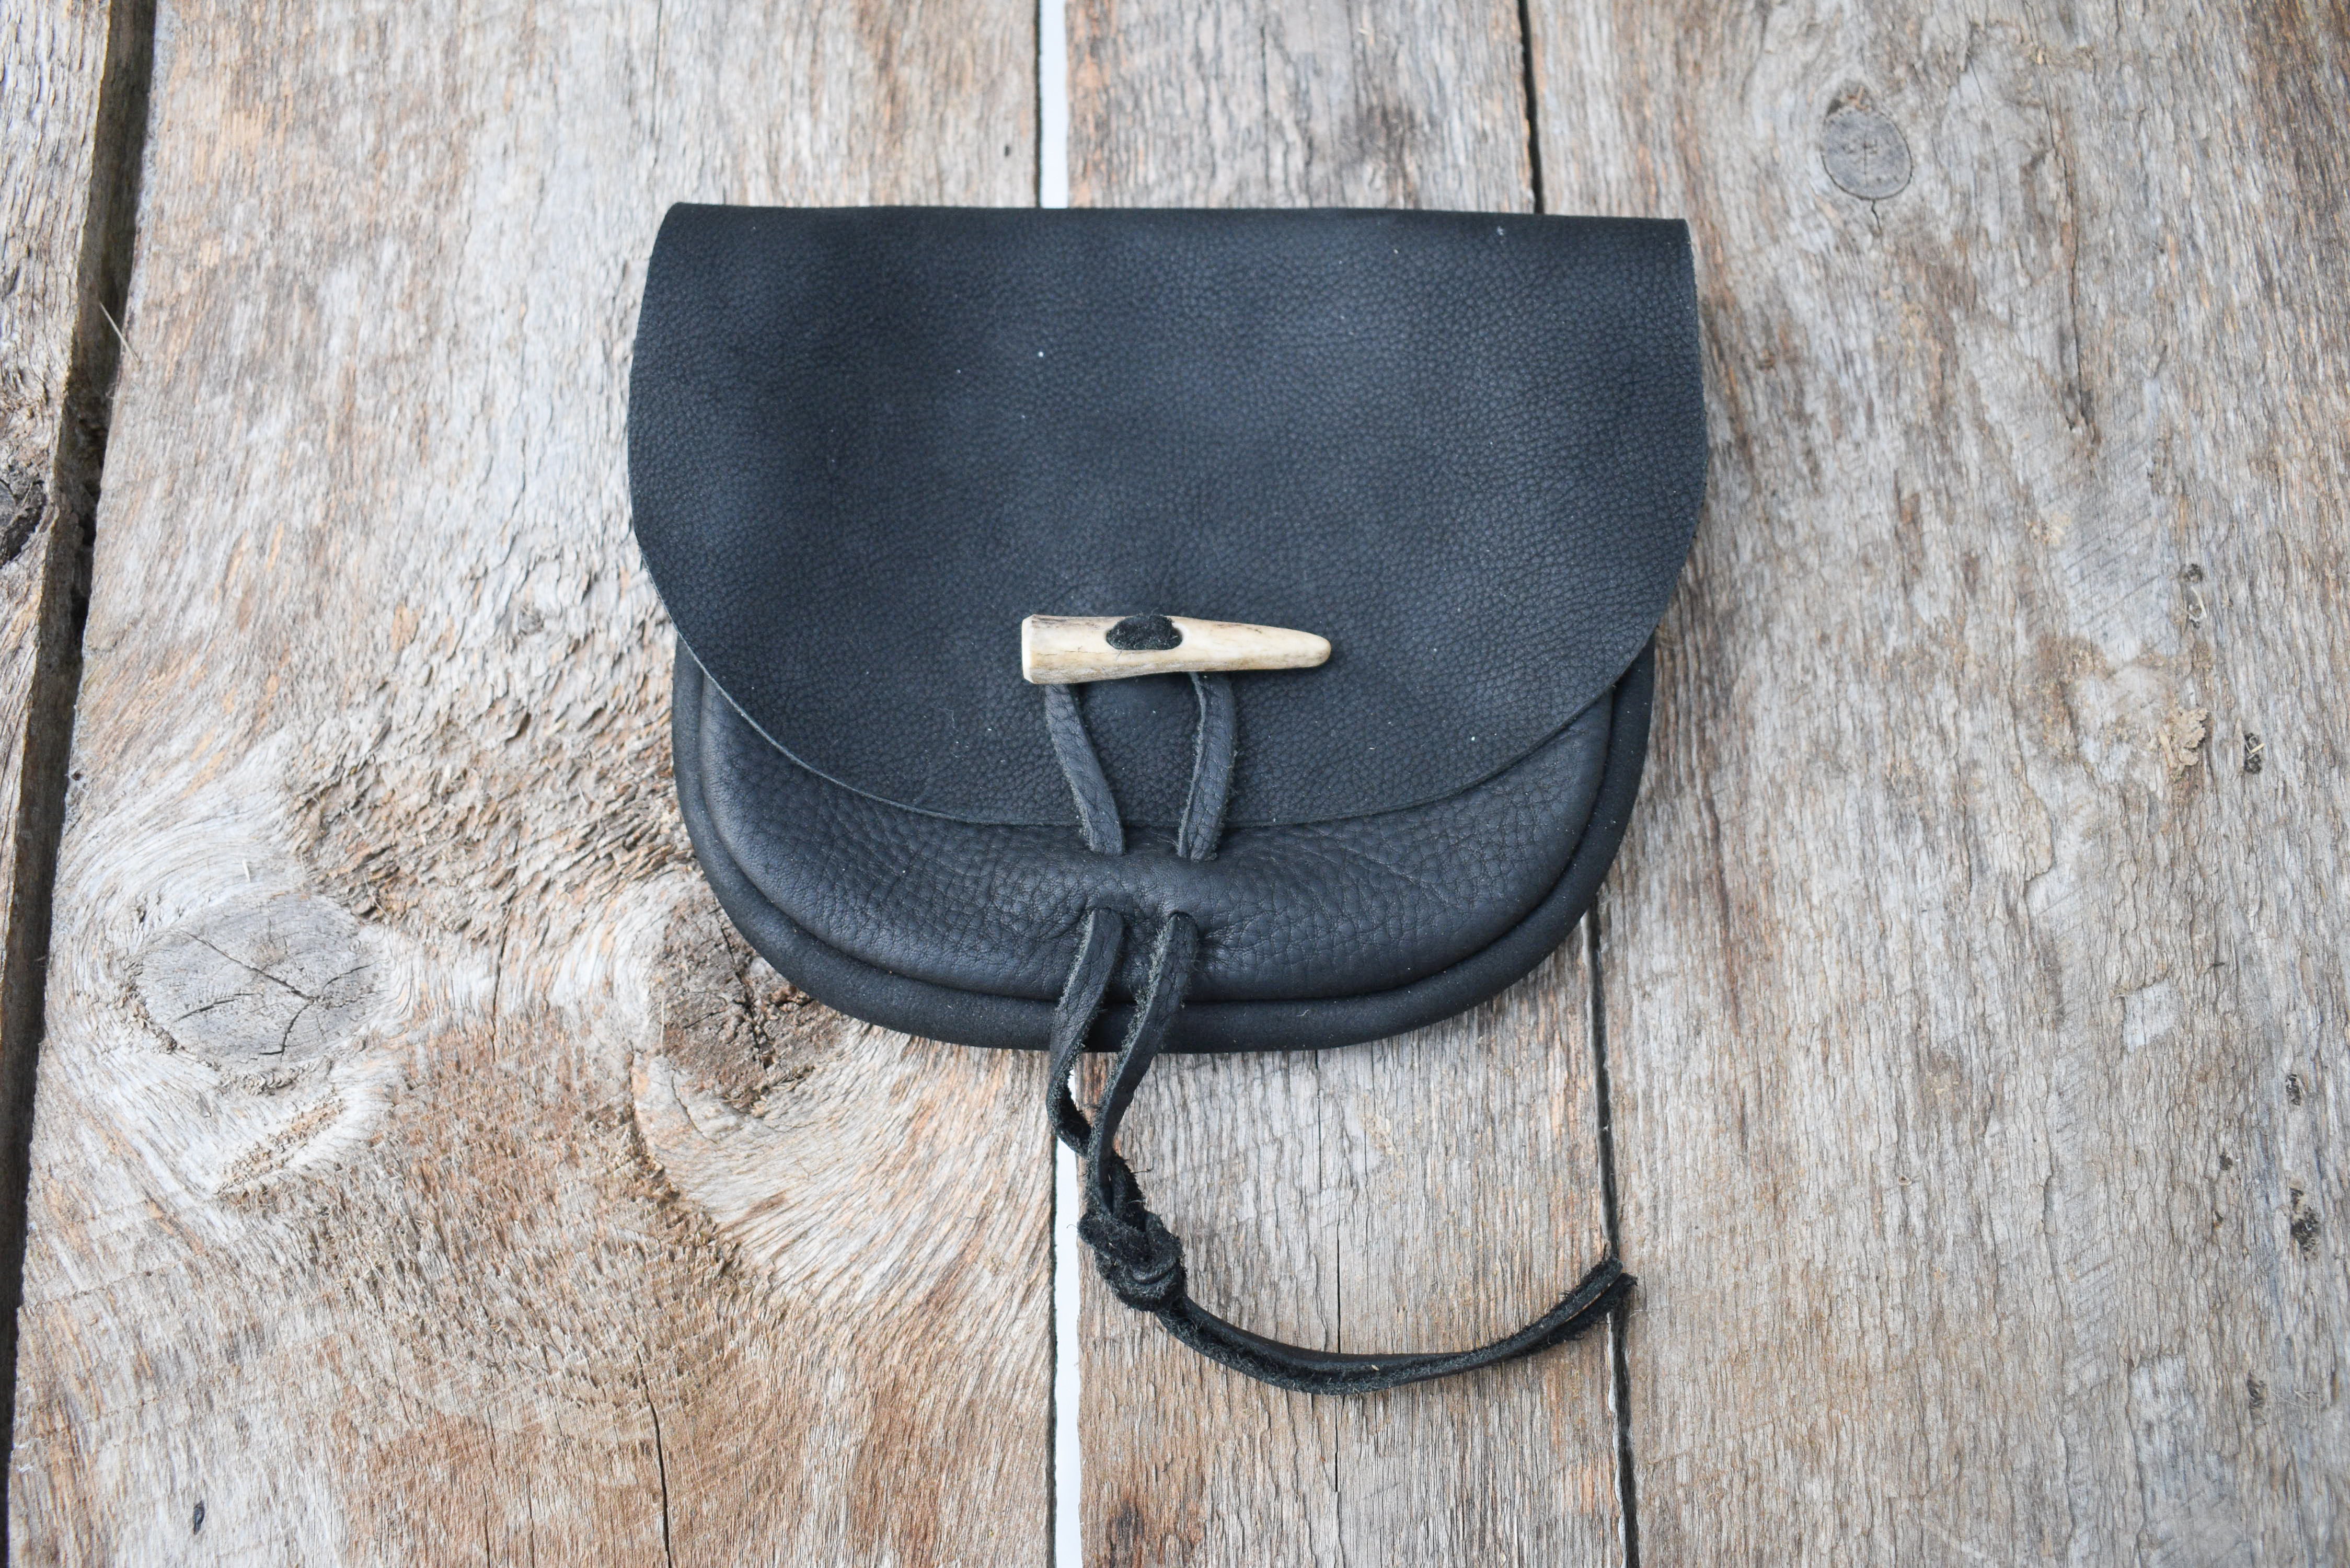 Leather BELT Pouch, bushcraft pouch, EDC pouch, waist bag, belt bag or –  gwleathercraft